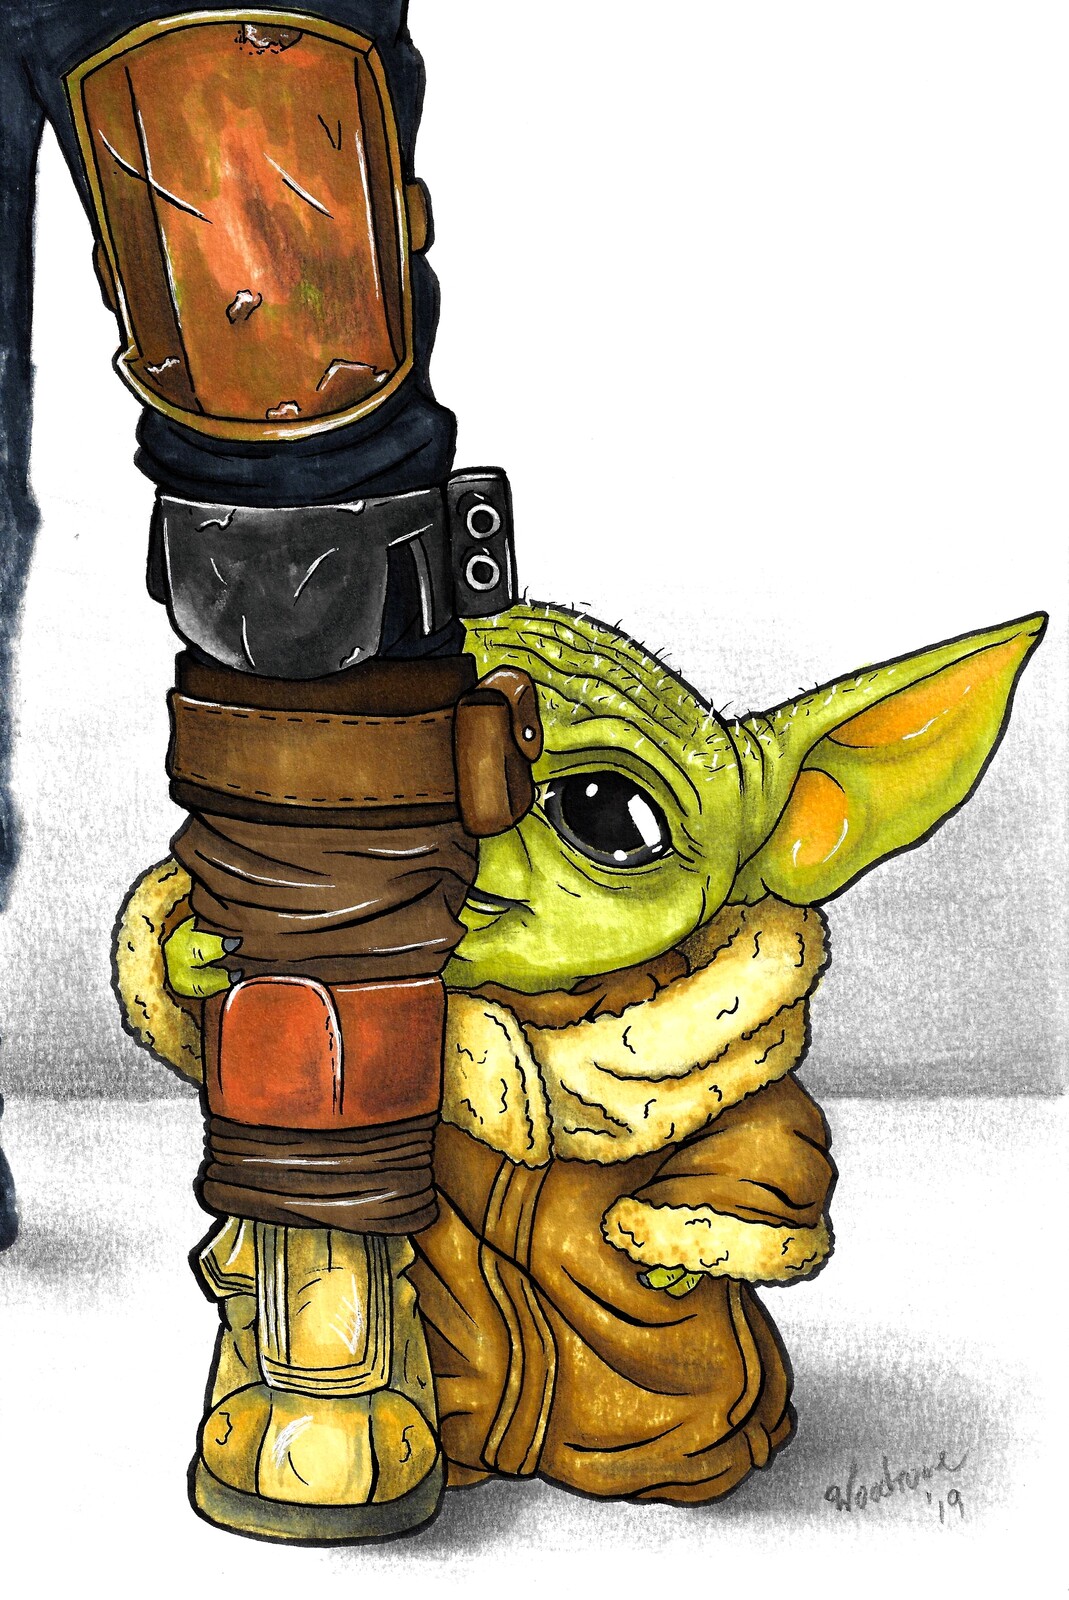 Grogu, baby Yoda